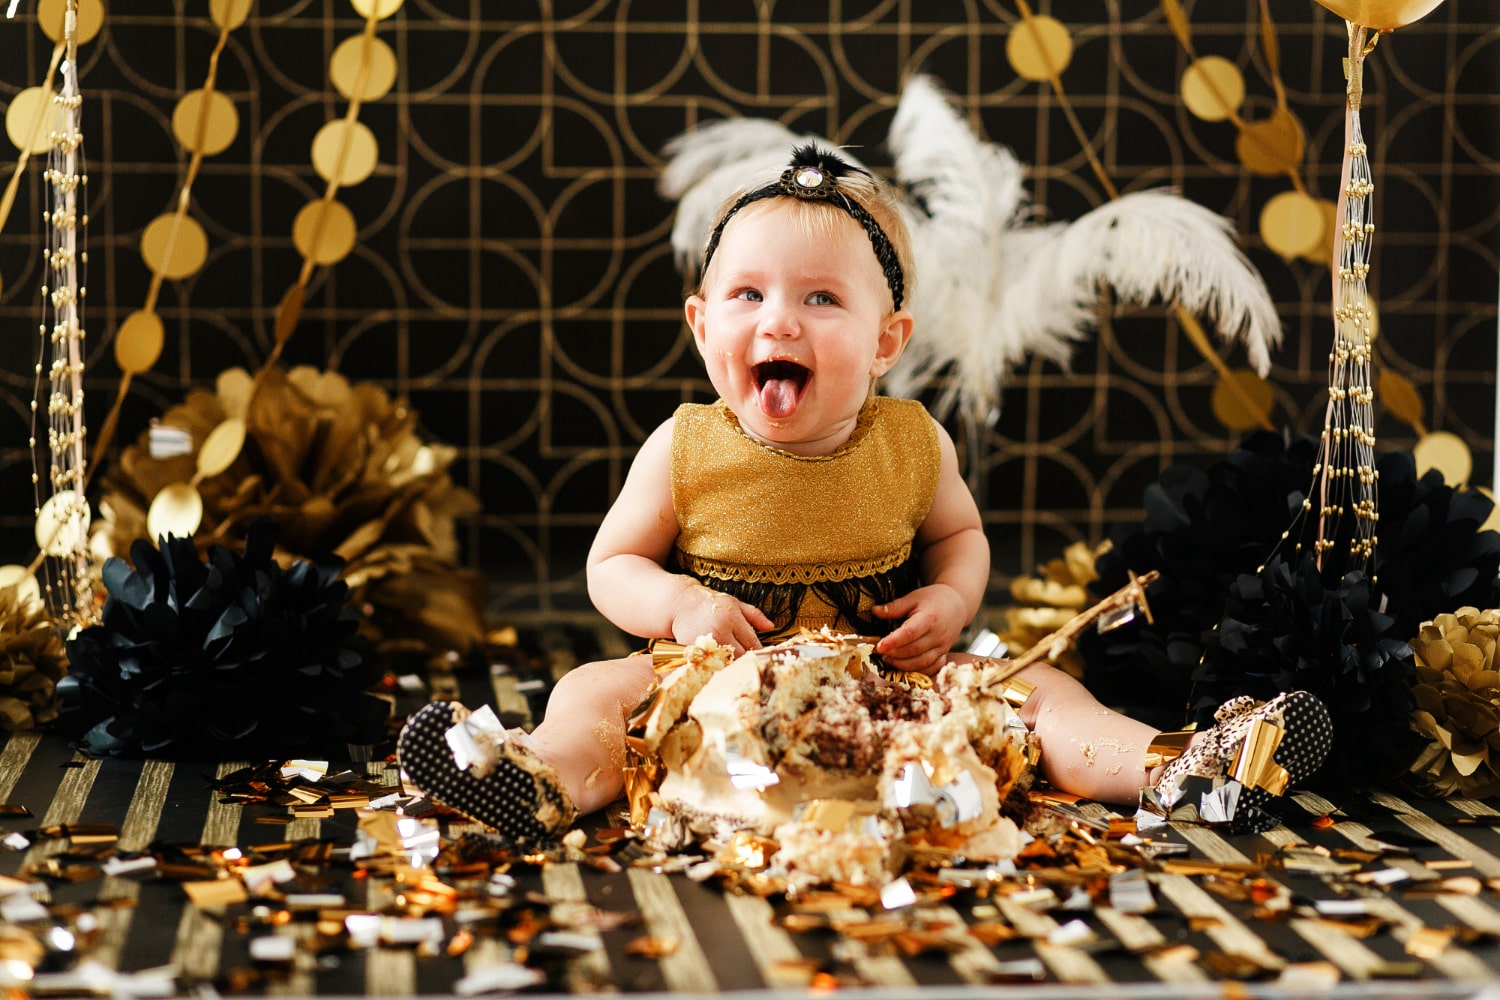 Rockstar-inspired newborn baby photoshoot showcasing little star's charm